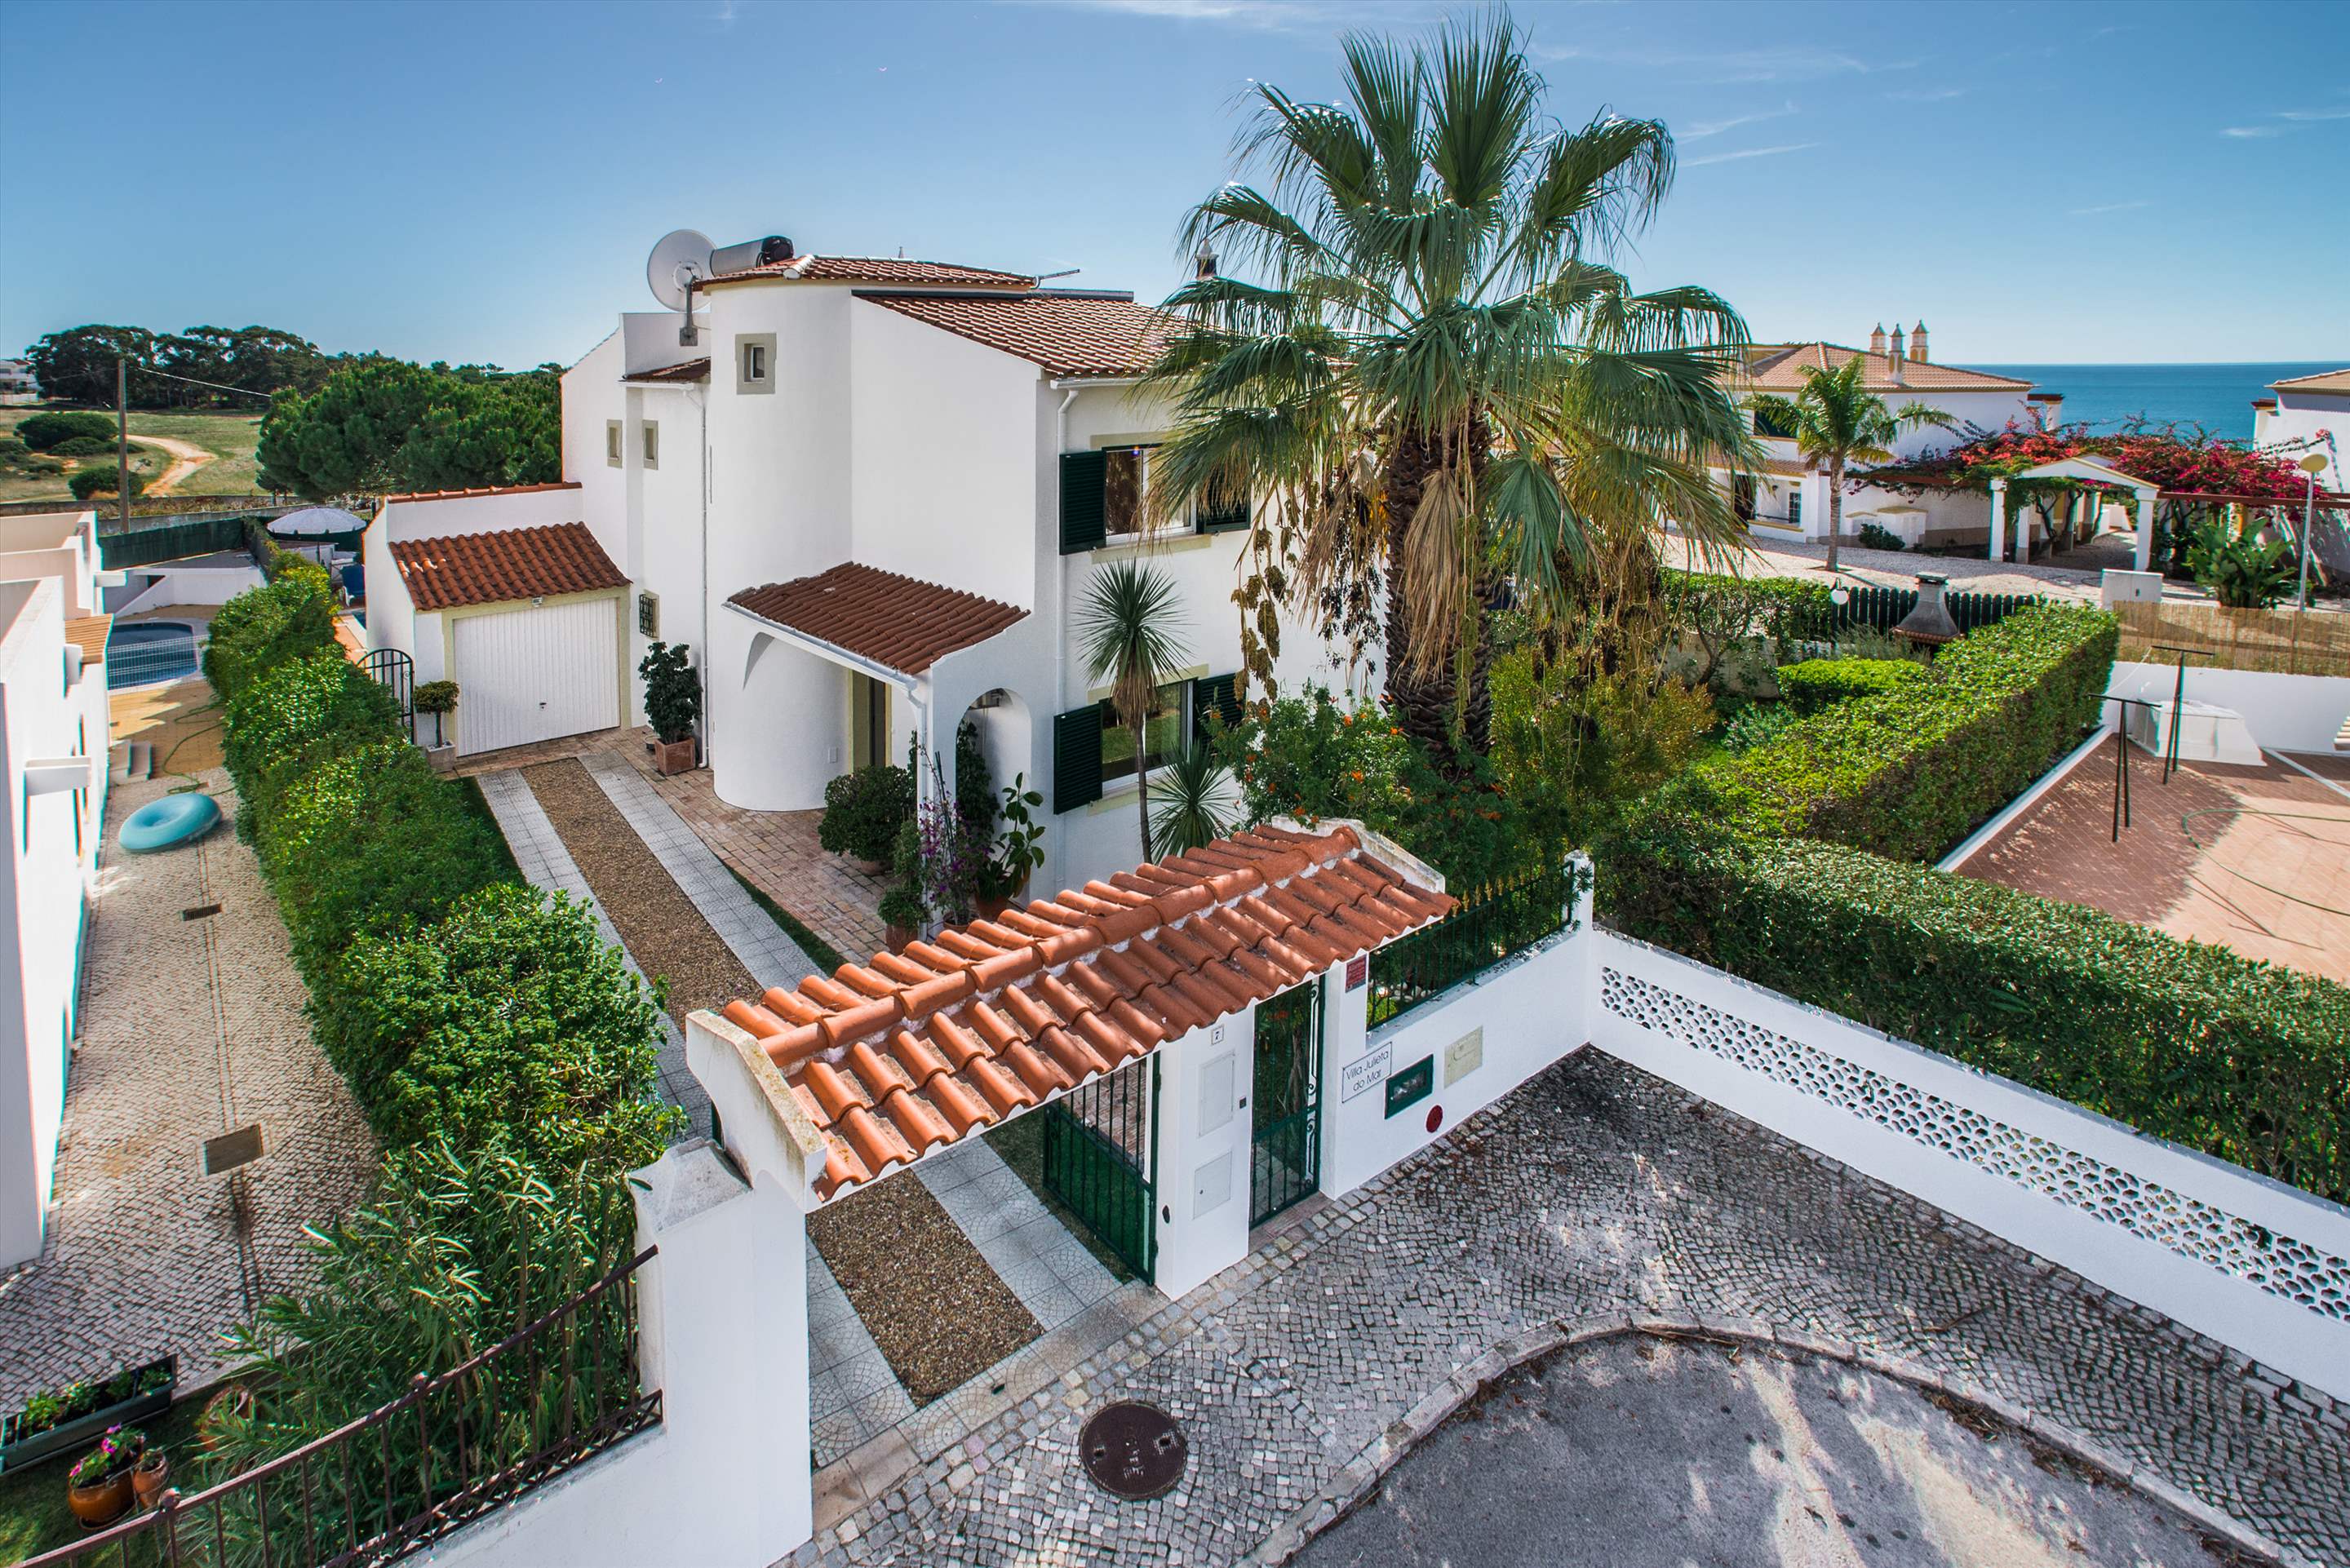 Julieta do Mar, 3 bedroom villa in Gale, Vale da Parra and Guia, Algarve Photo #29